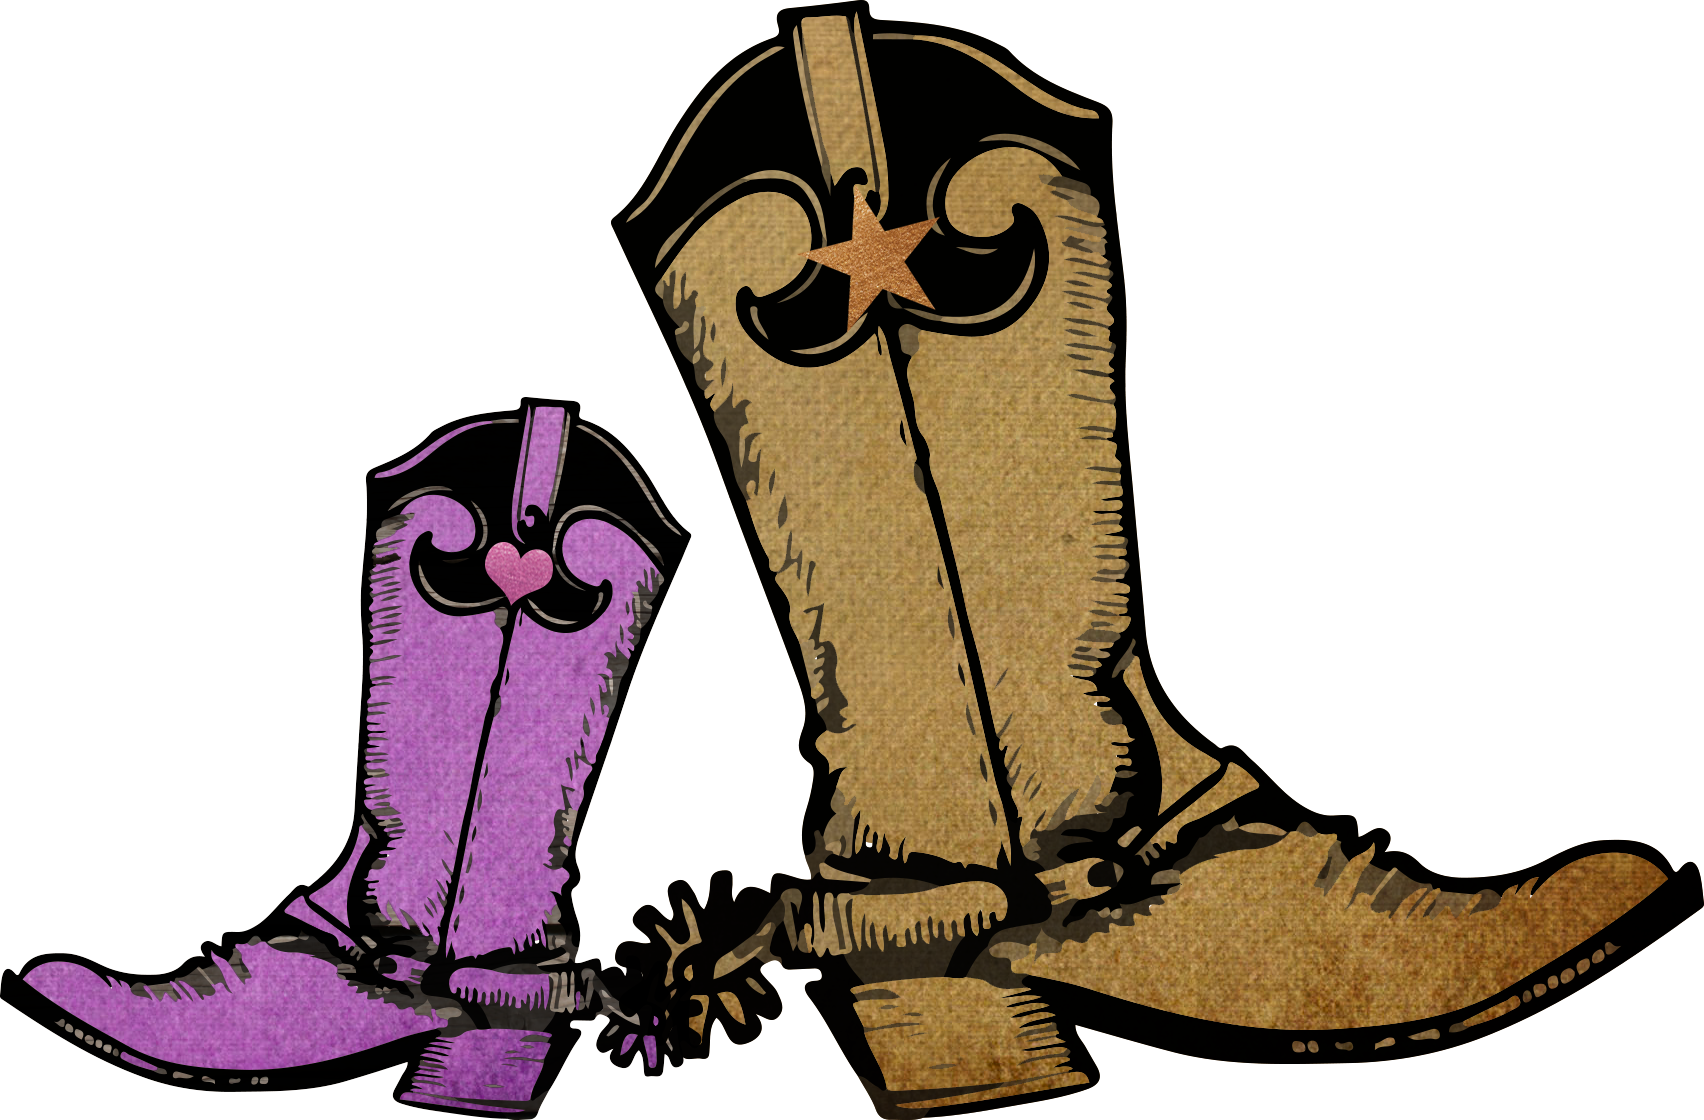 Cowboy Boot (1704x1120)